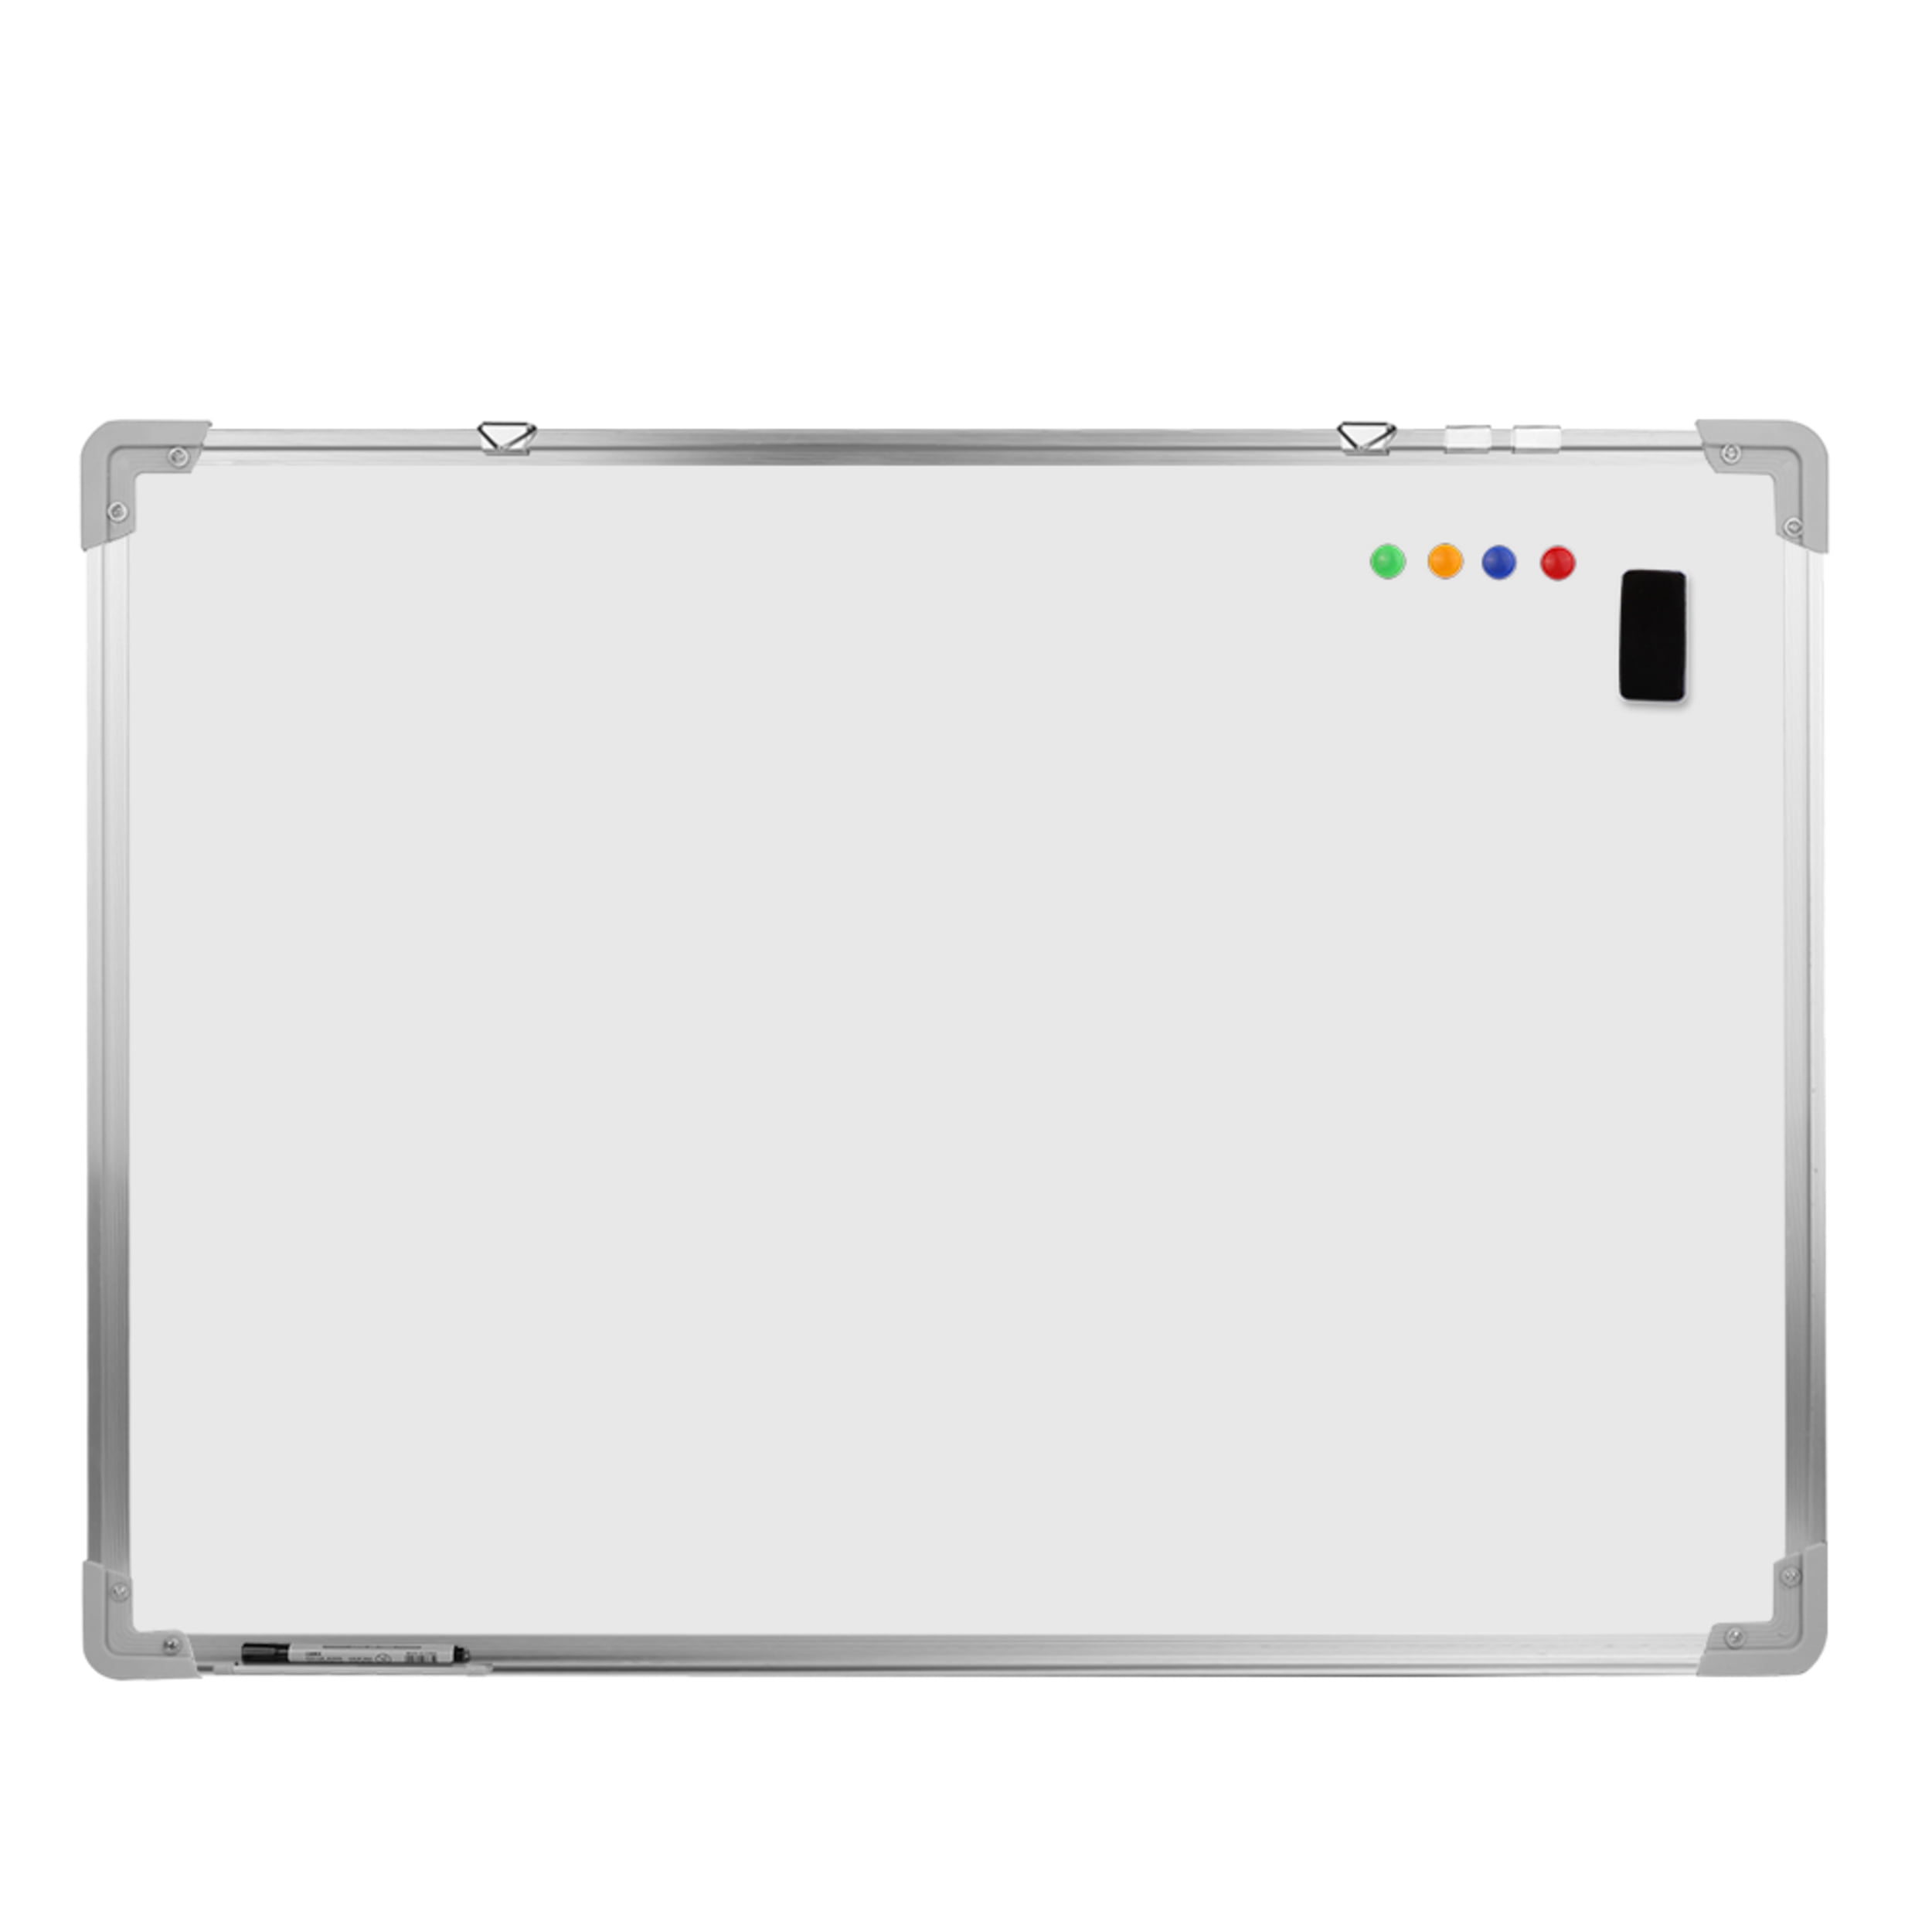 wall-mounted-magnetic-whiteboard-36-x-48-inch-aluminum-frame-walmart